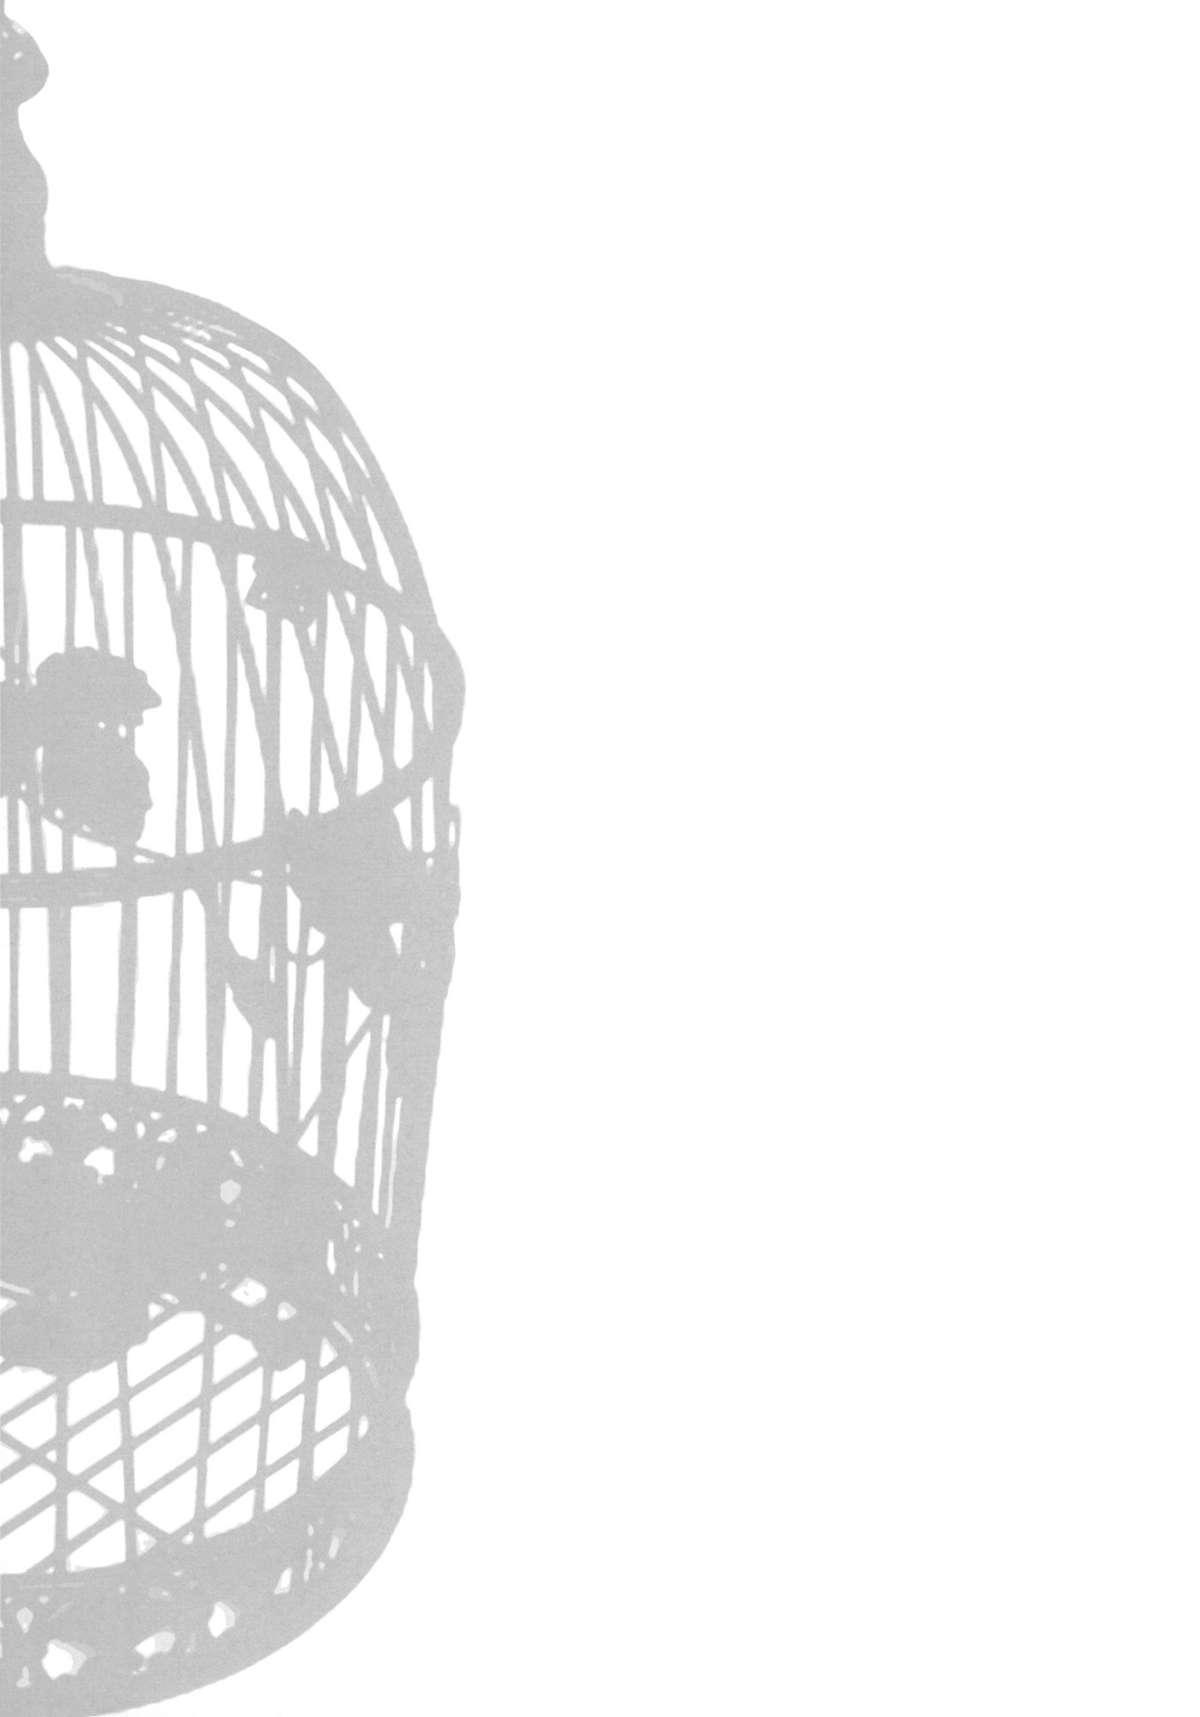 YUKIHO HAGIWARA in the Bird Cage 27